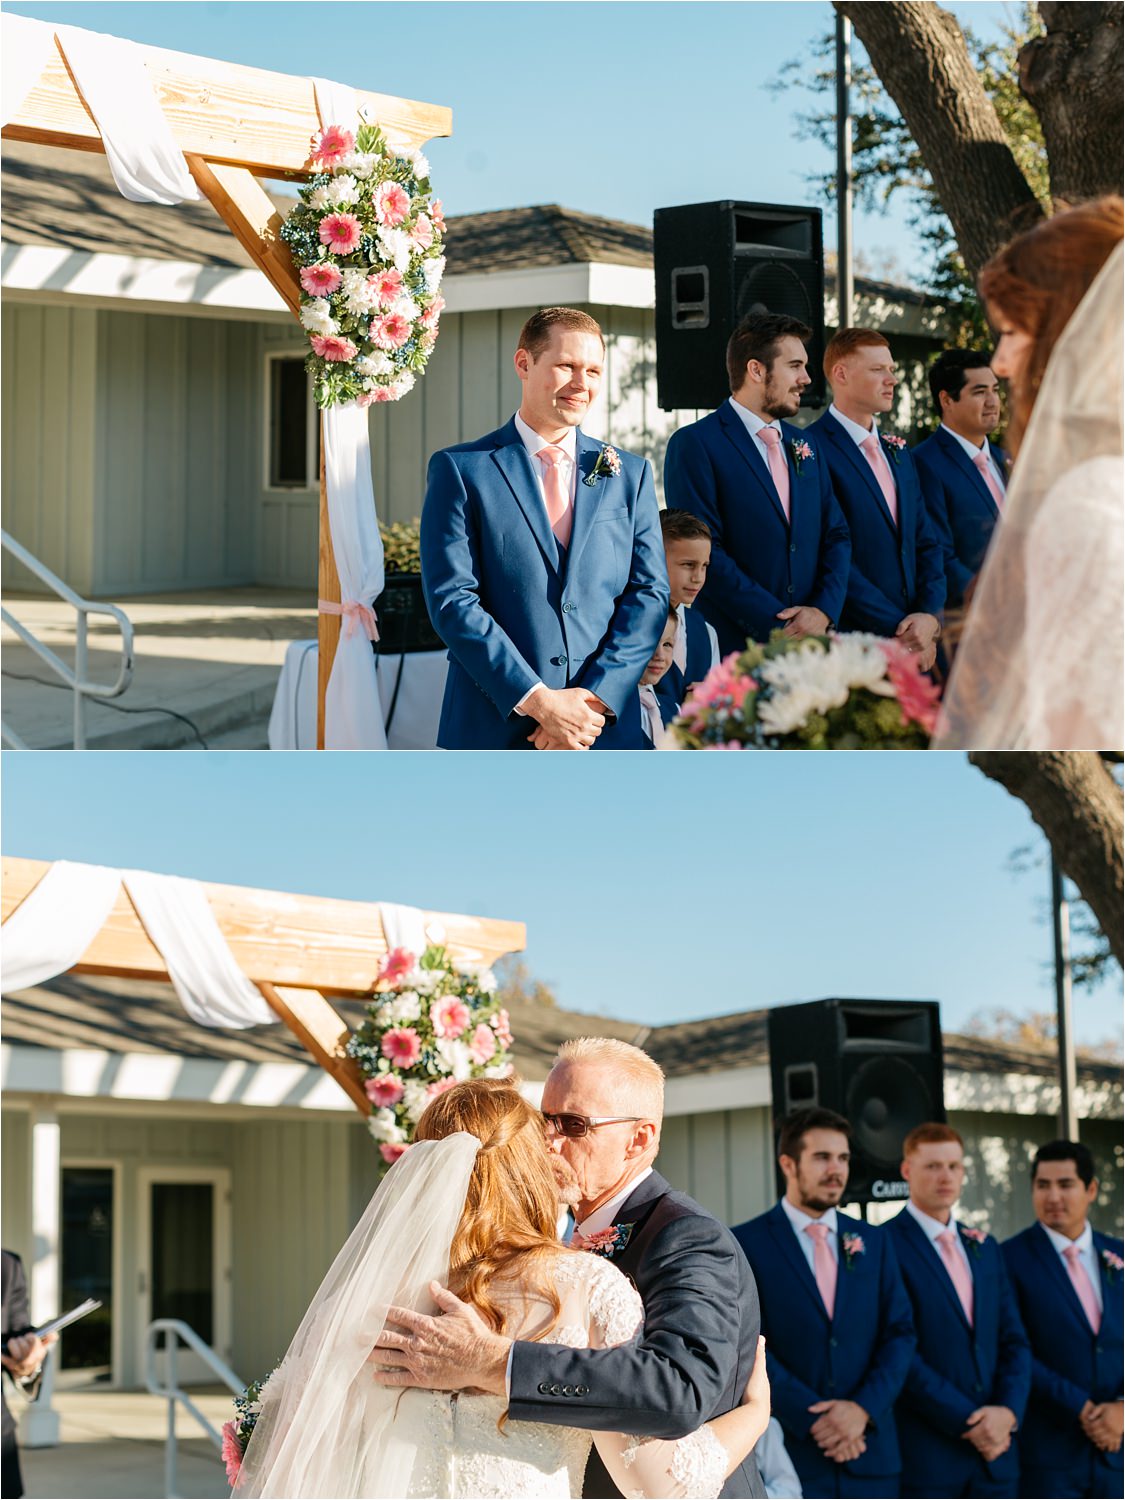 McCoy Equestrian Center Wedding Ceremony - Chino Hills, CA Wedding Photographer - https://brittneyhannonphotography.com